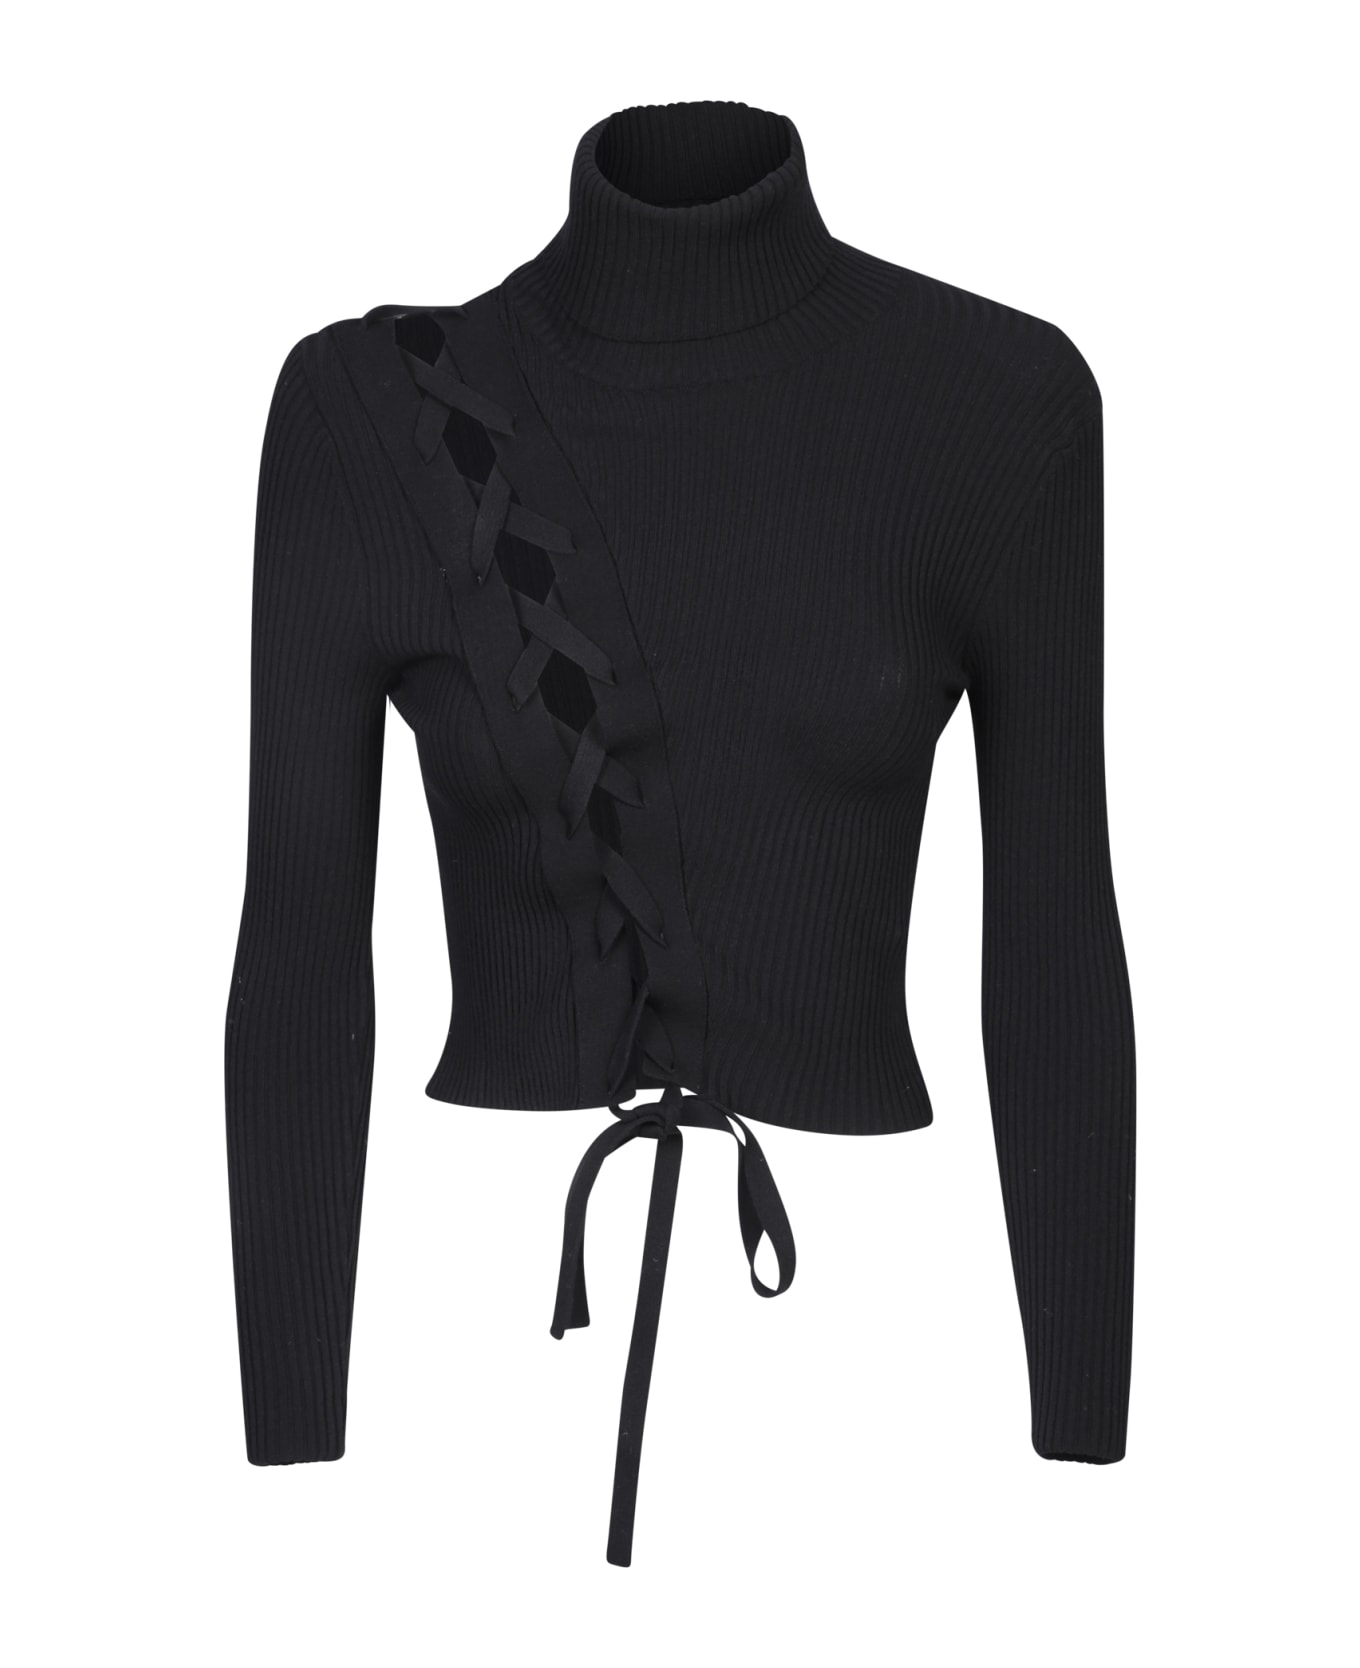 SSHEENA Black Lace-up Cropped Sweater - Black ニットウェア